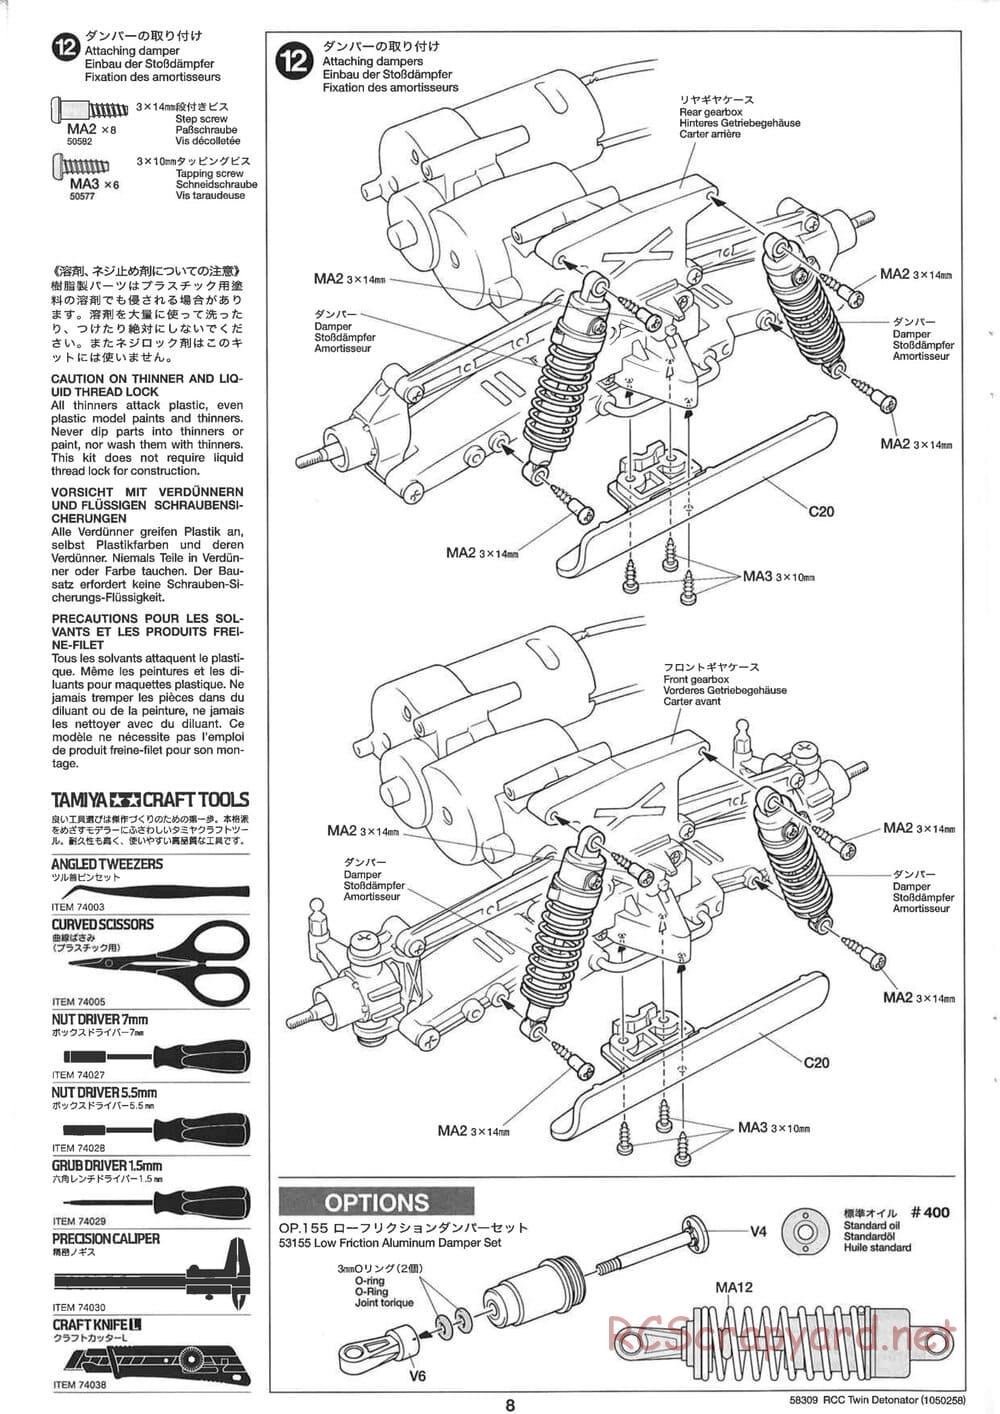 Tamiya - Twin Detonator - WR-01 Chassis - Manual - Page 8